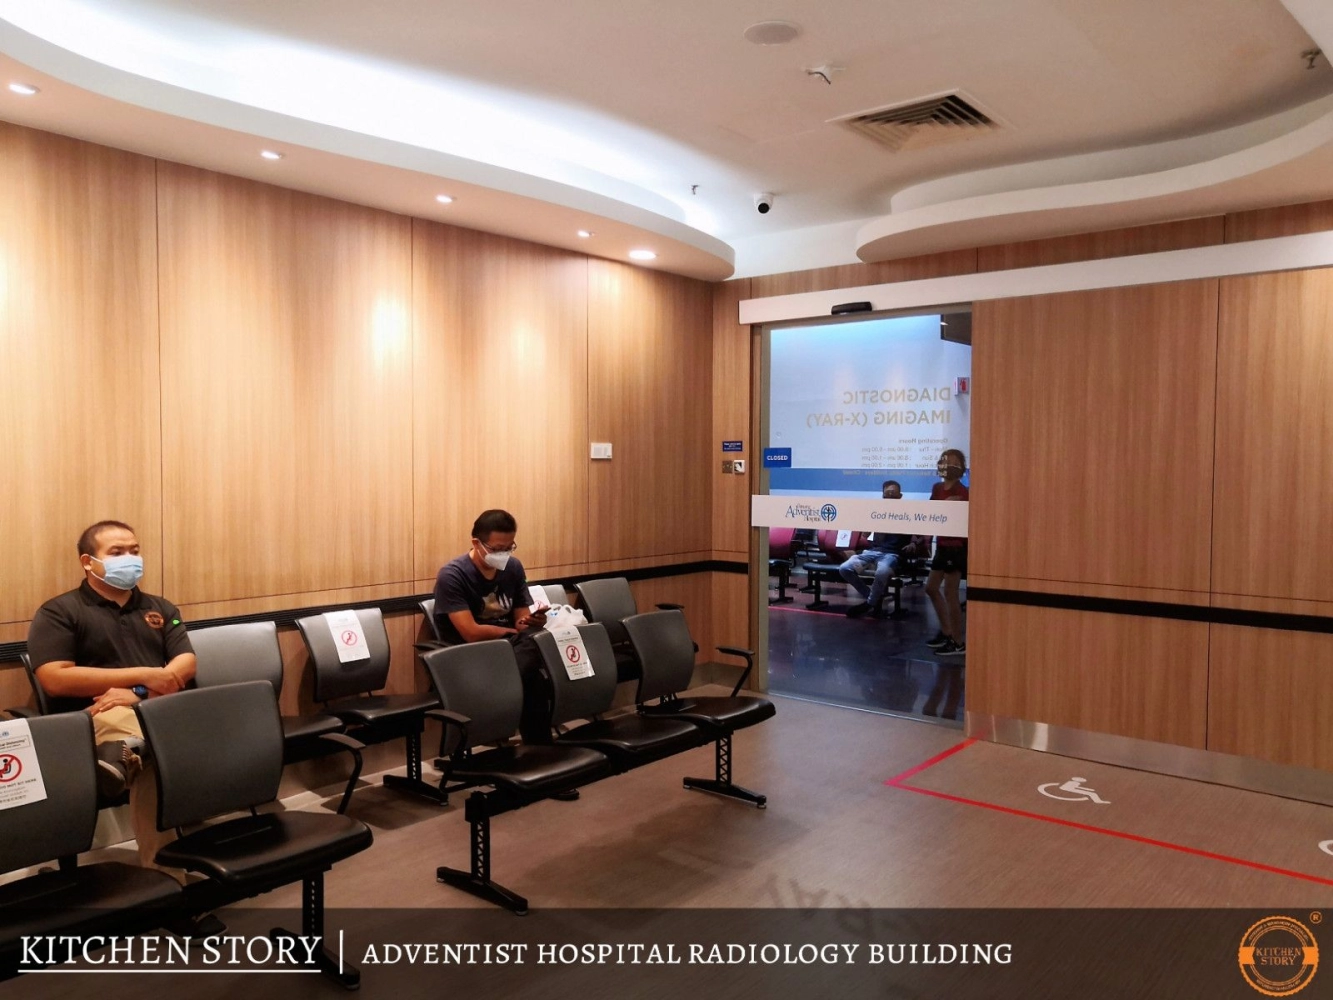 Adventist Hospital Radiology Building